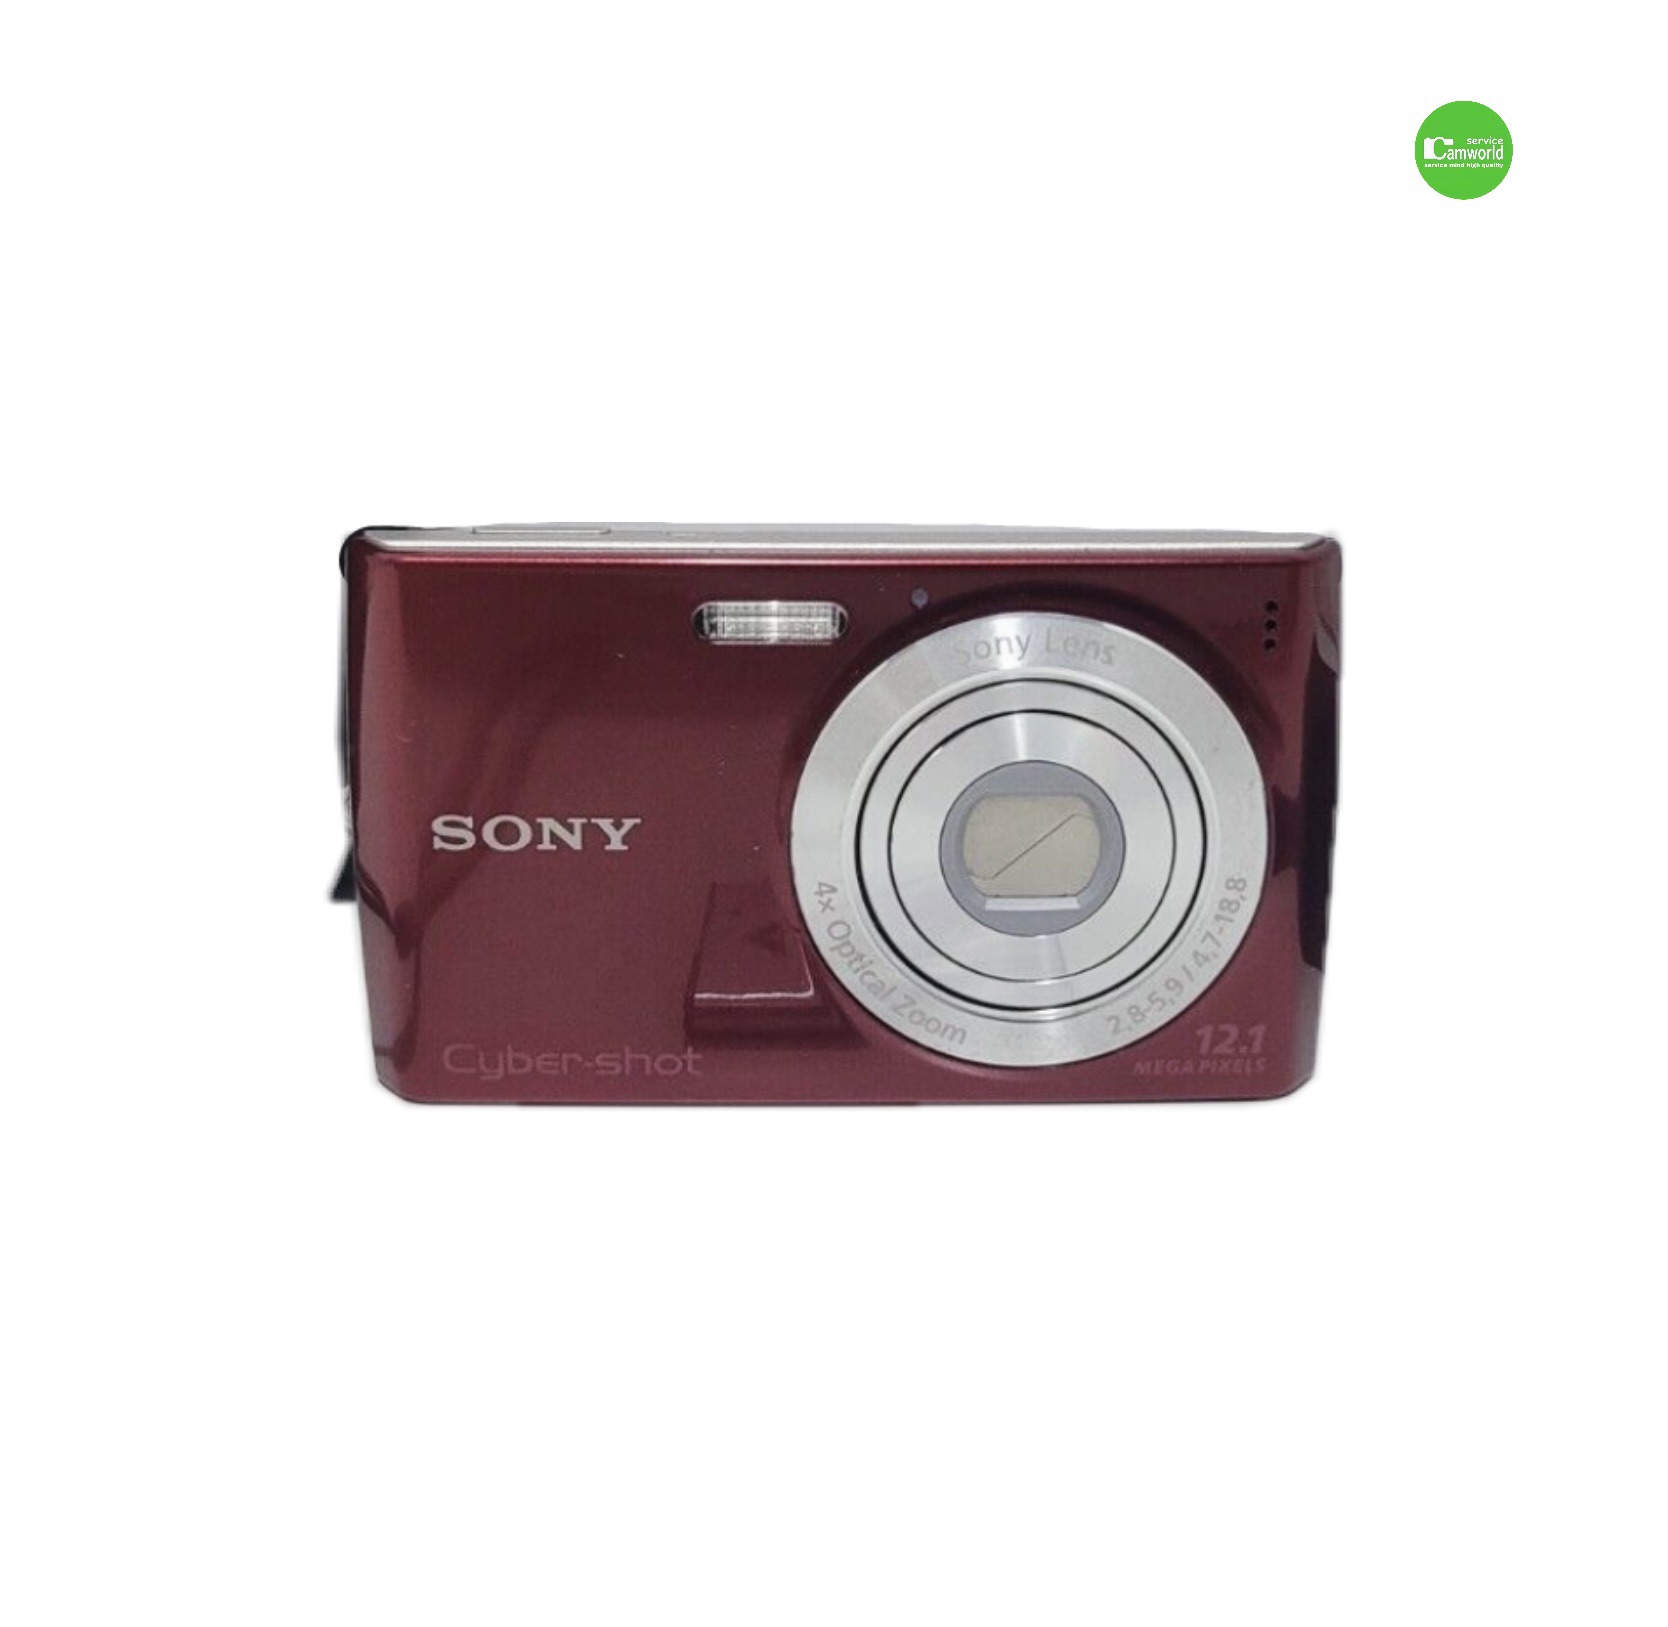 Veteran Compact Camera Review SONY DSC-W530 EP.1, Gallery posted by  โดดงานไปถ่ายรูป